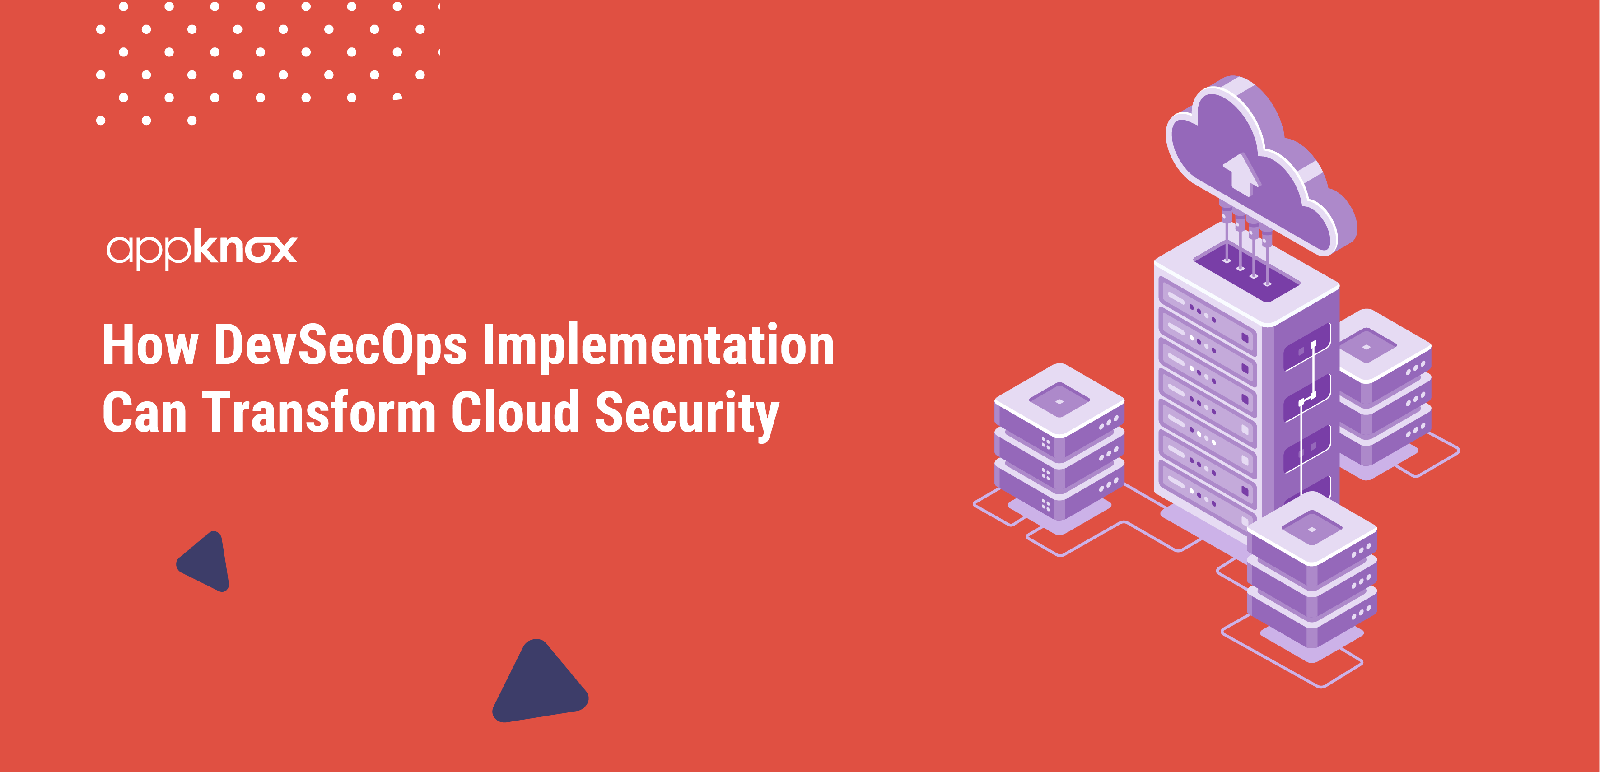 DevSecOps Implementation Can Transform Cloud Security